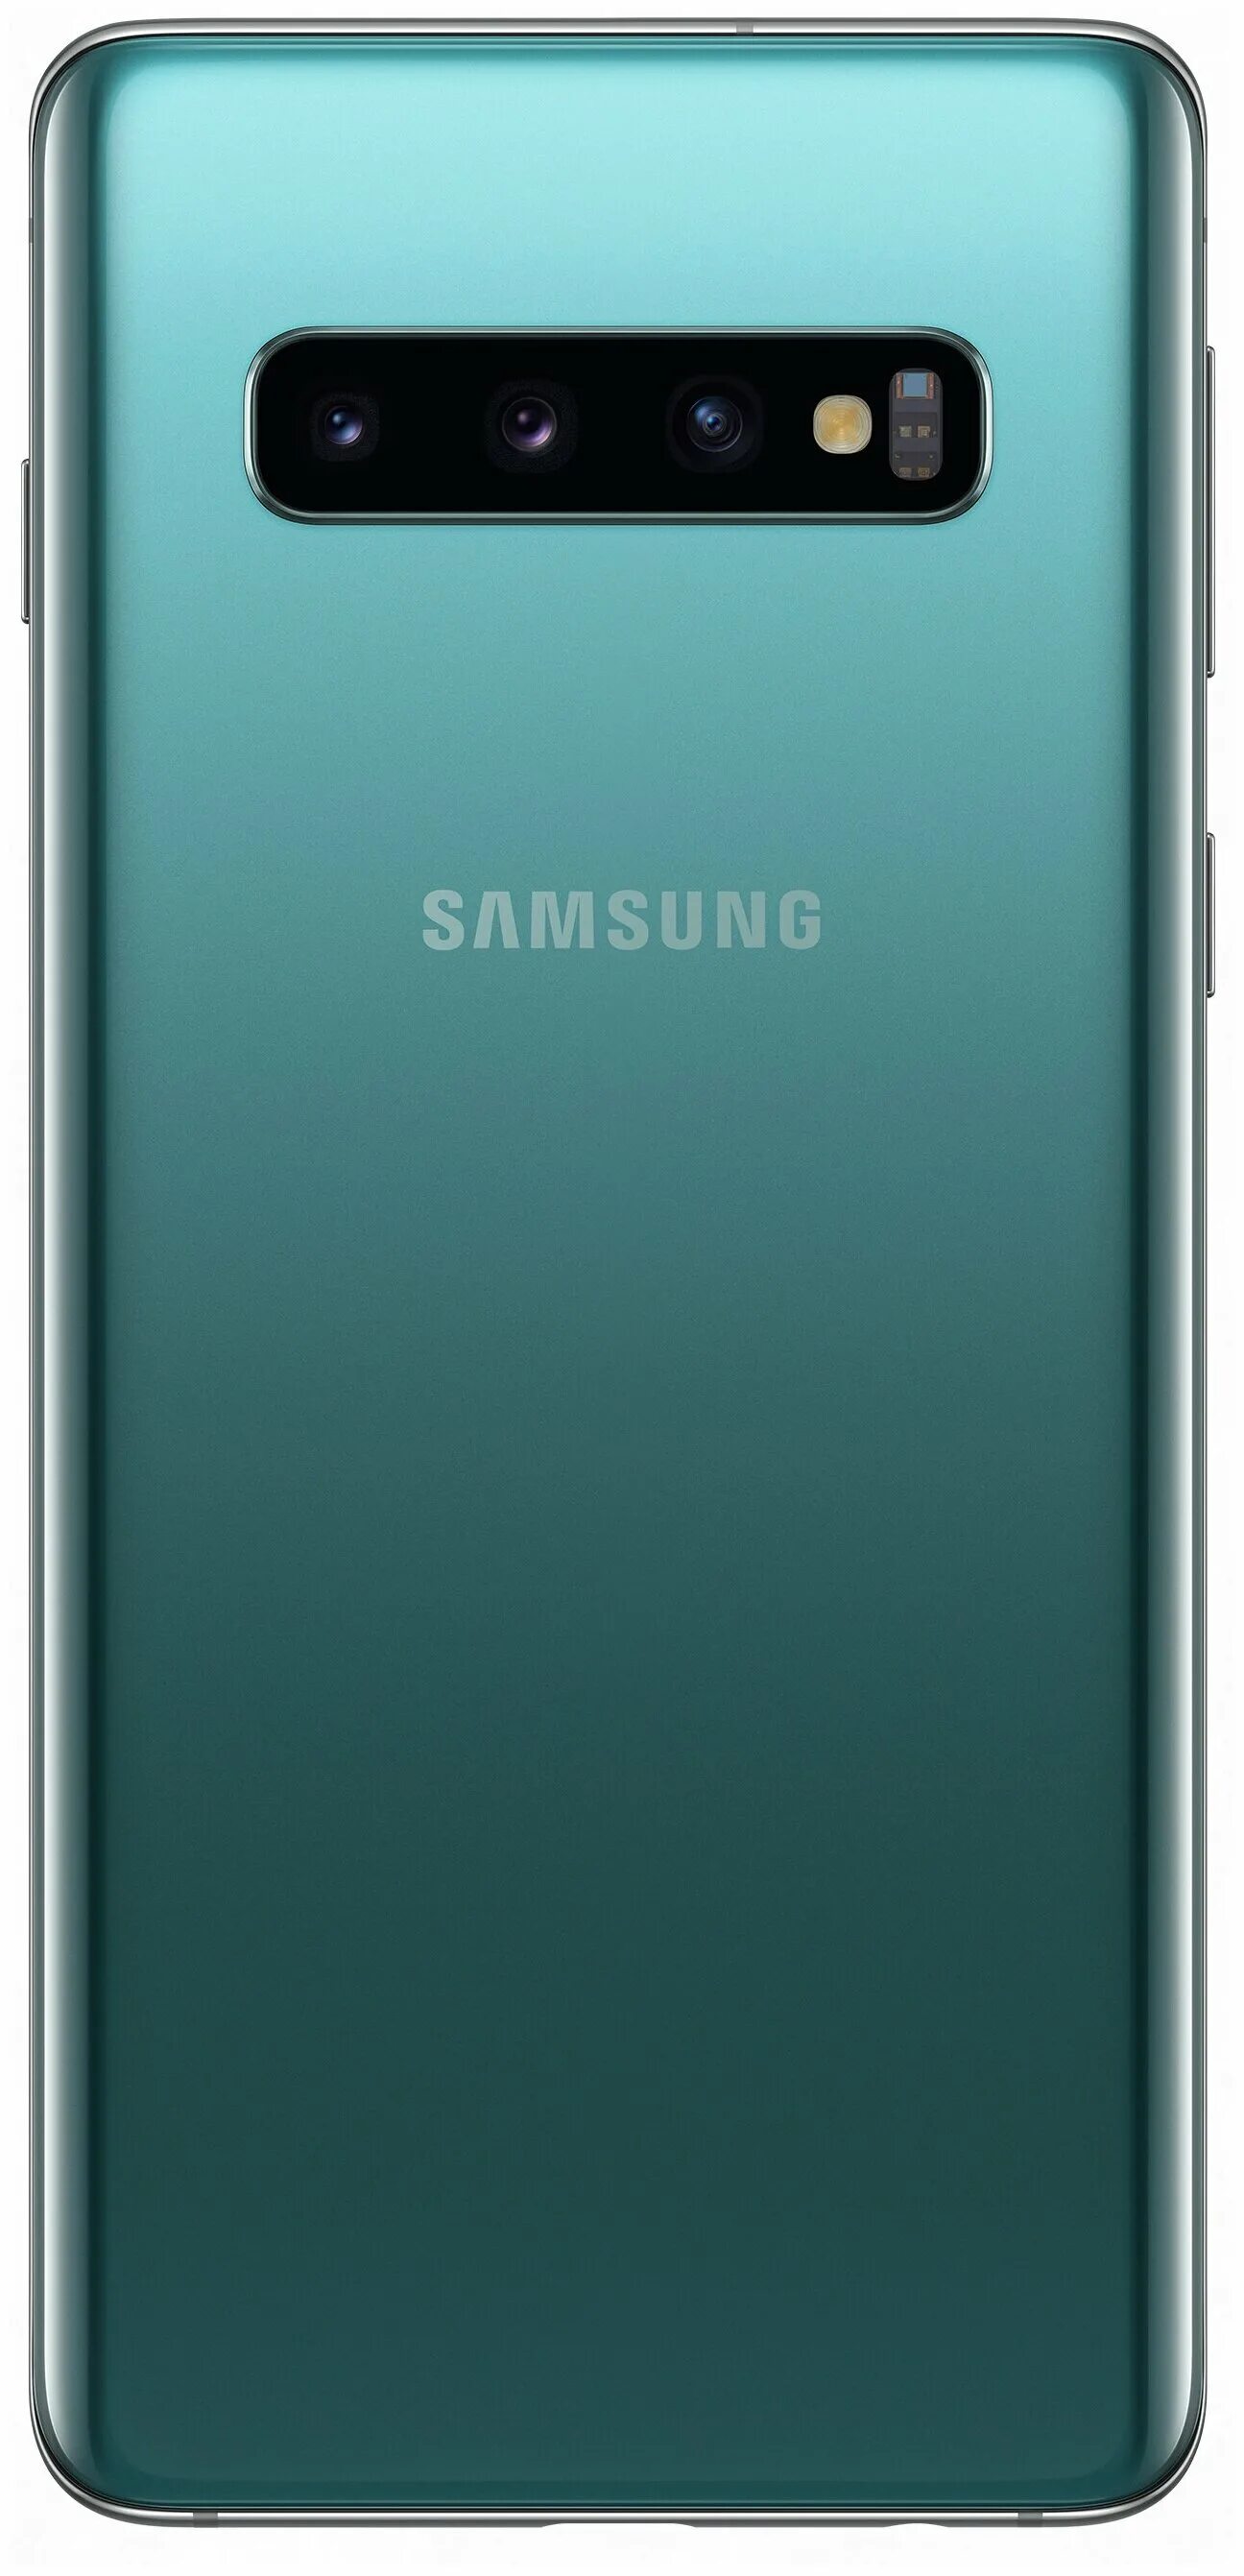 Смартфон Samsung Galaxy a10s. Samsung Galaxy s10 Plus. Samsung Galaxy s10 8/128gb. Samsung Galaxy s 10 плюс. Galaxy s10 отзывы